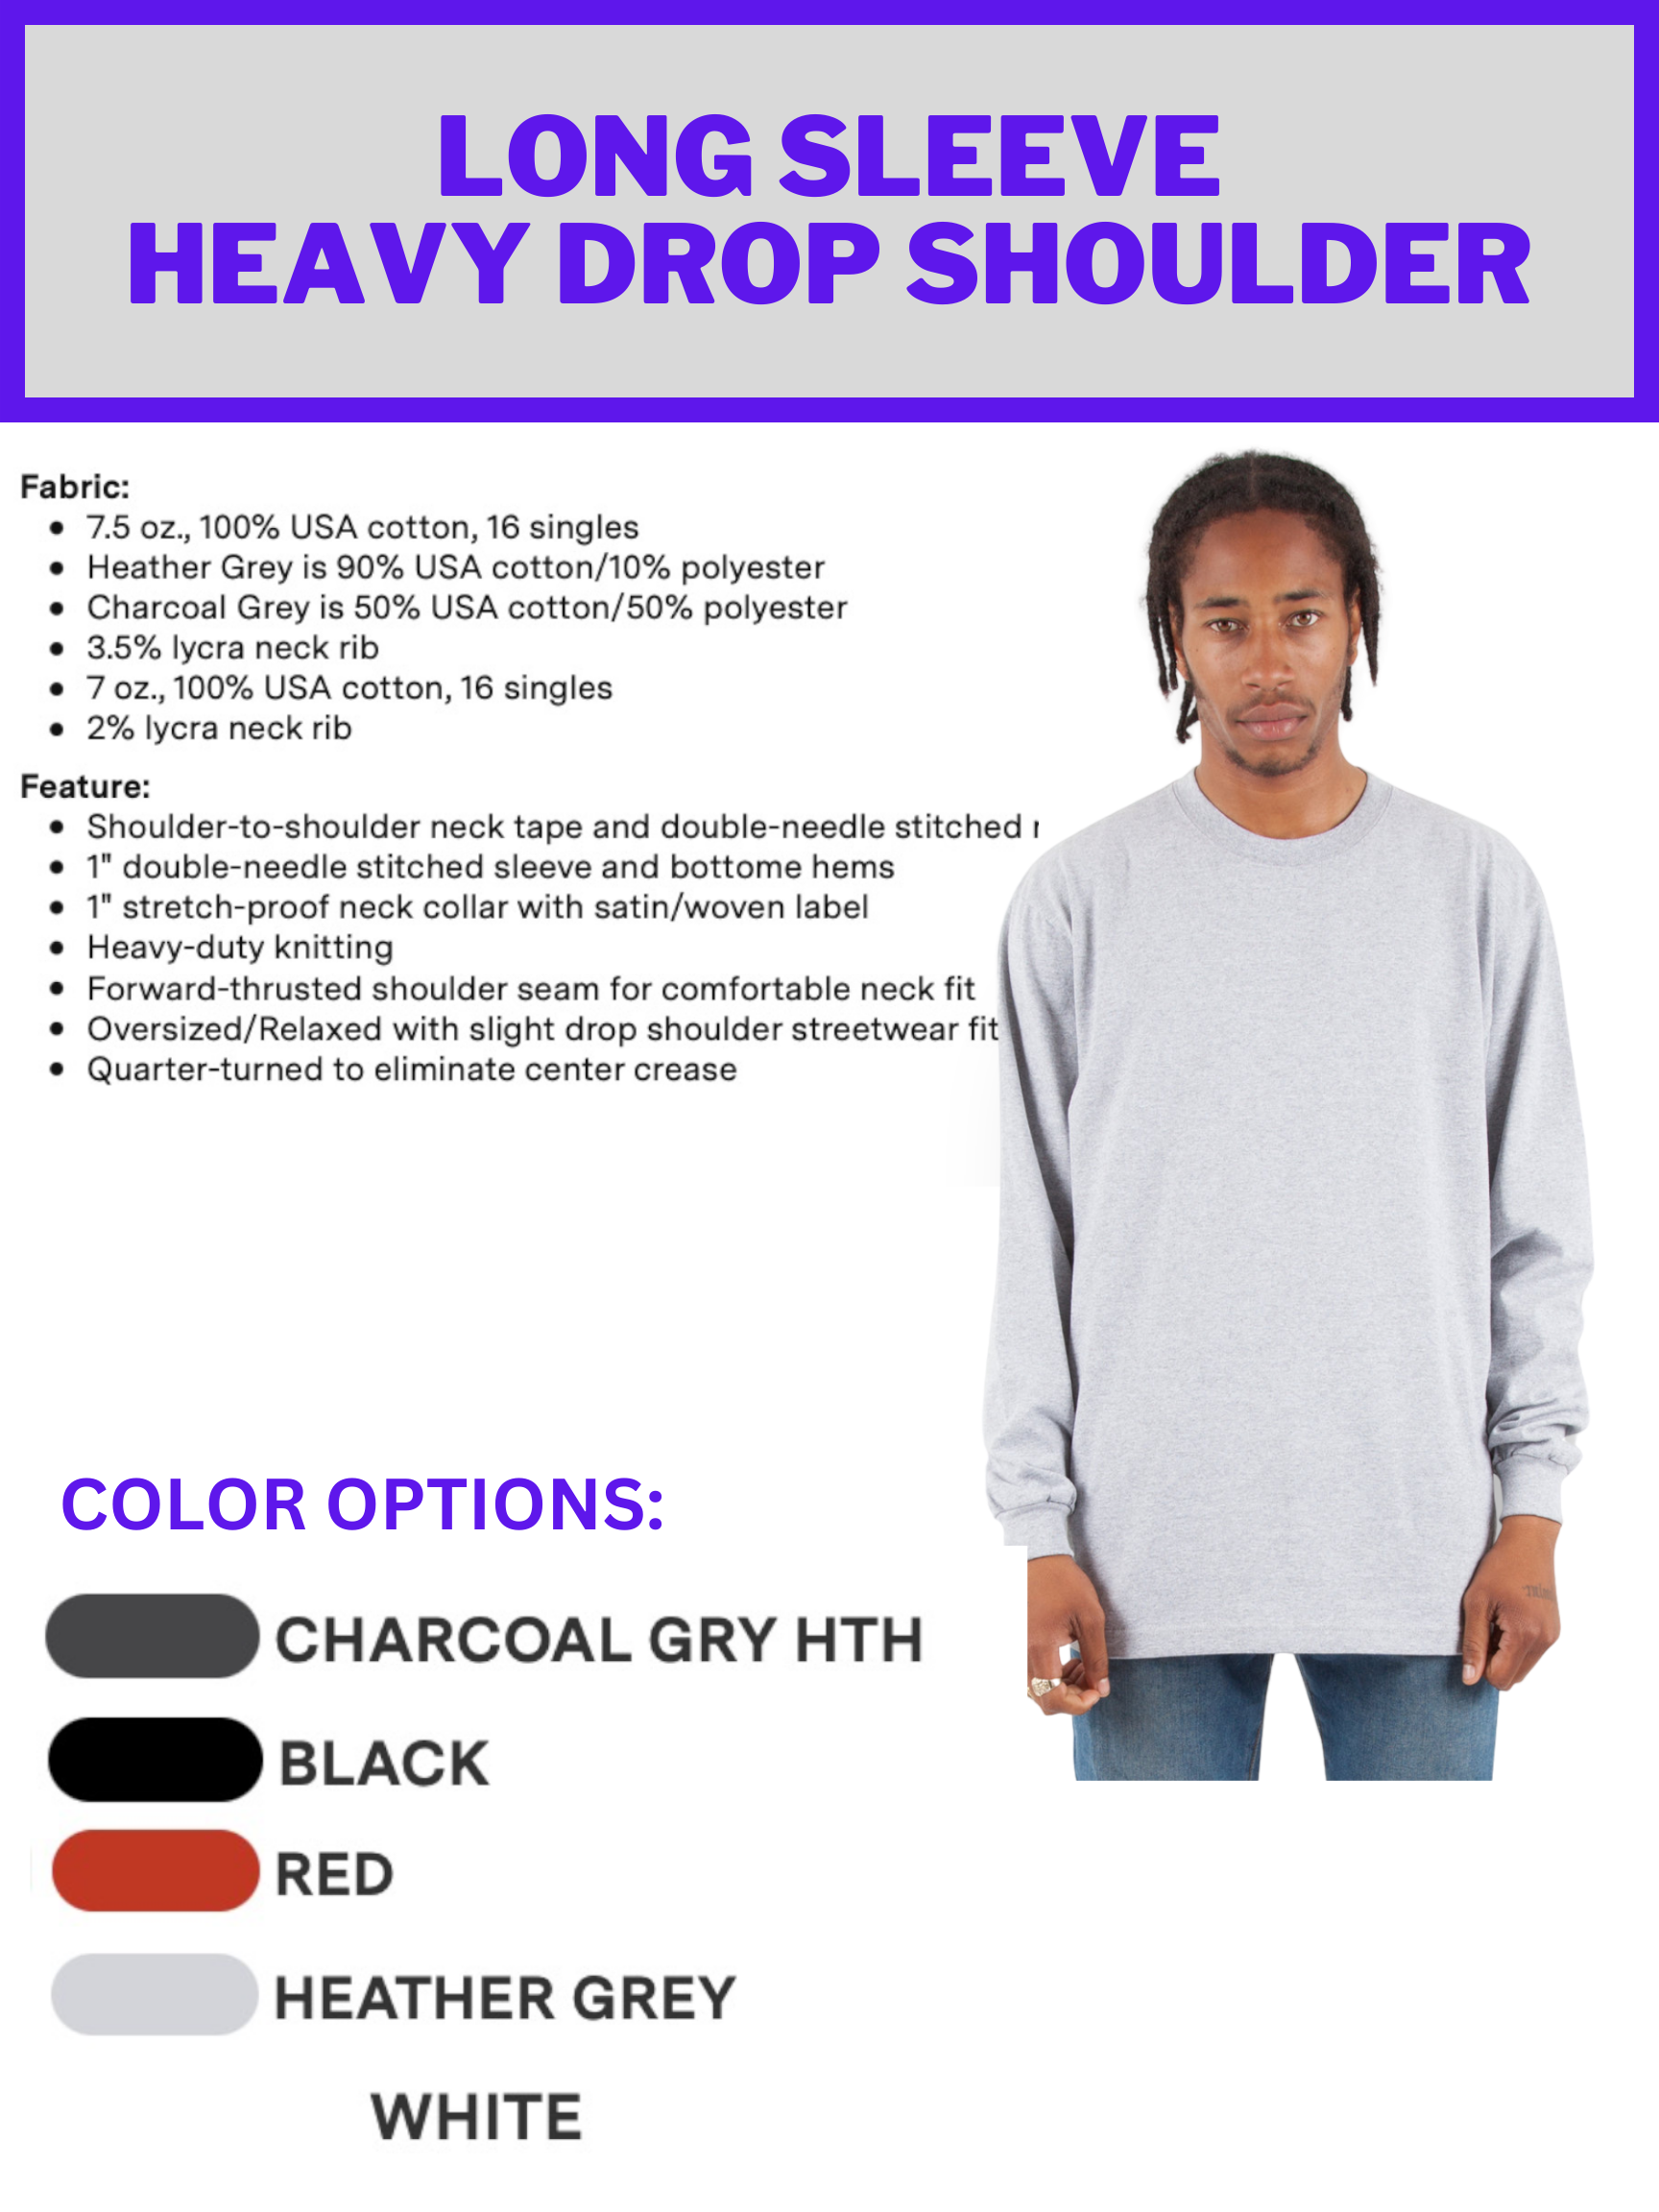 Shaka, Boxy Fit Shirts (Screen Printed)